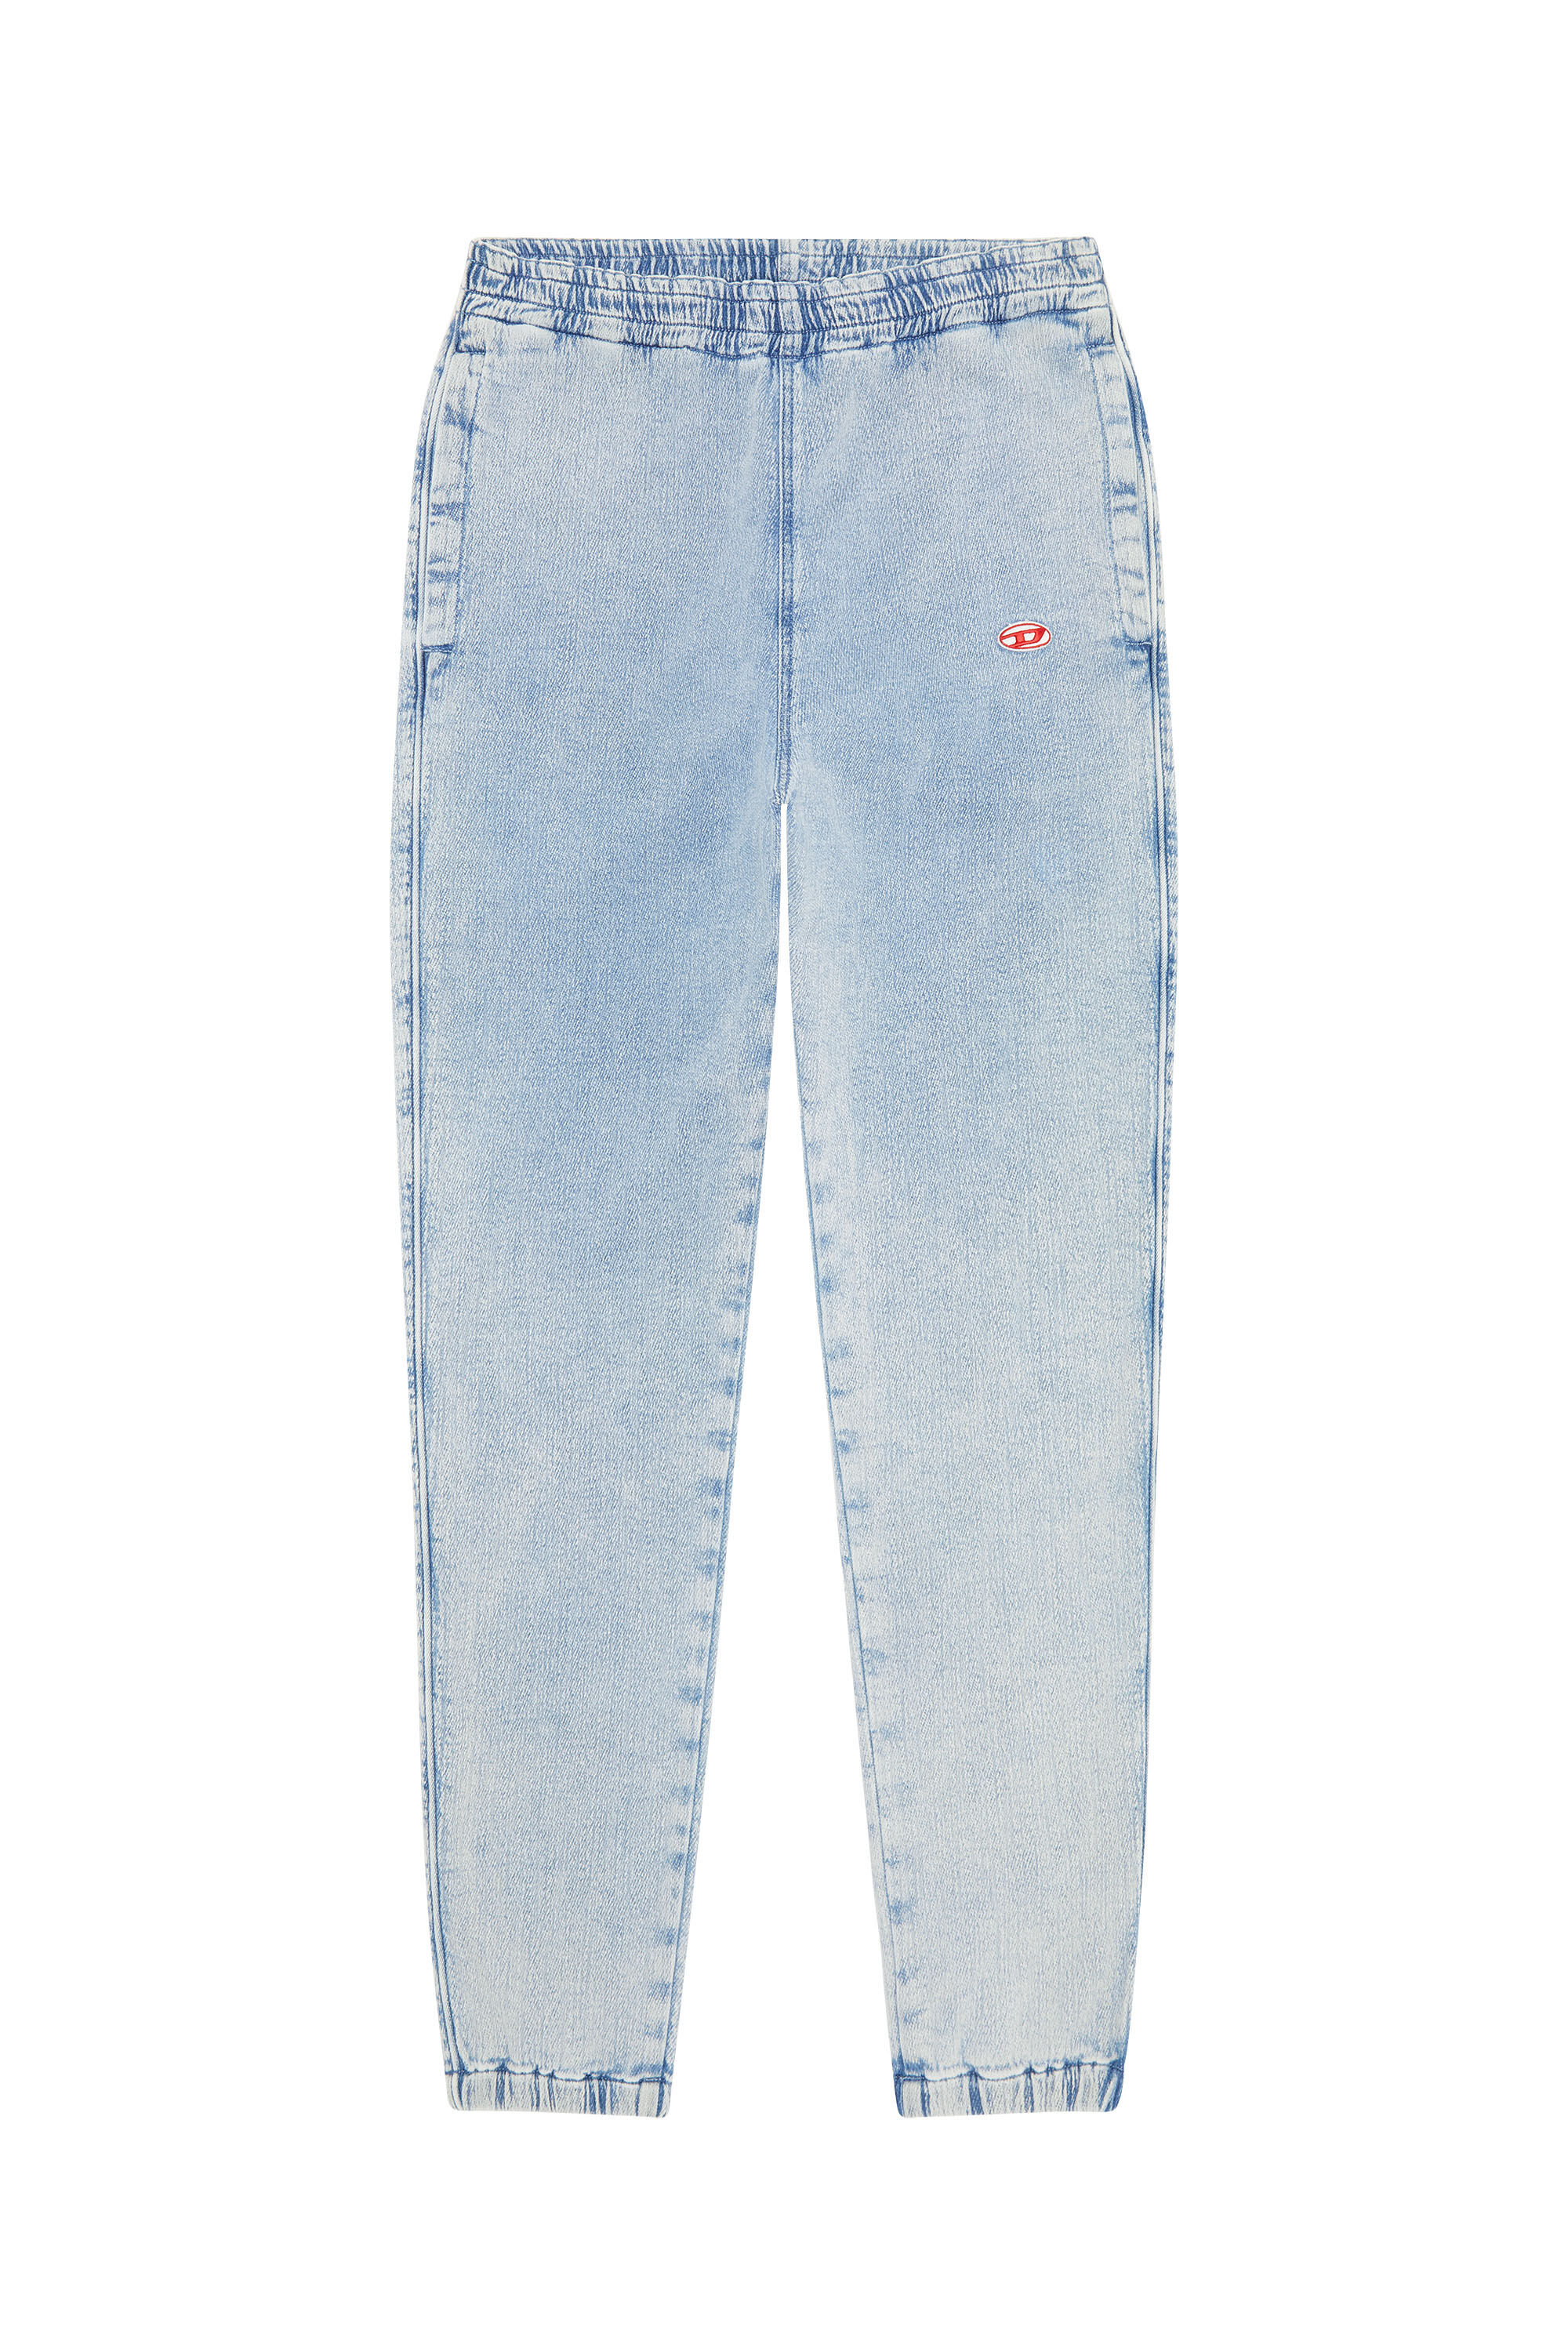 Mens Clothing Jeans Tapered jeans DIESEL Tapered D-lab Track Denim for Men 